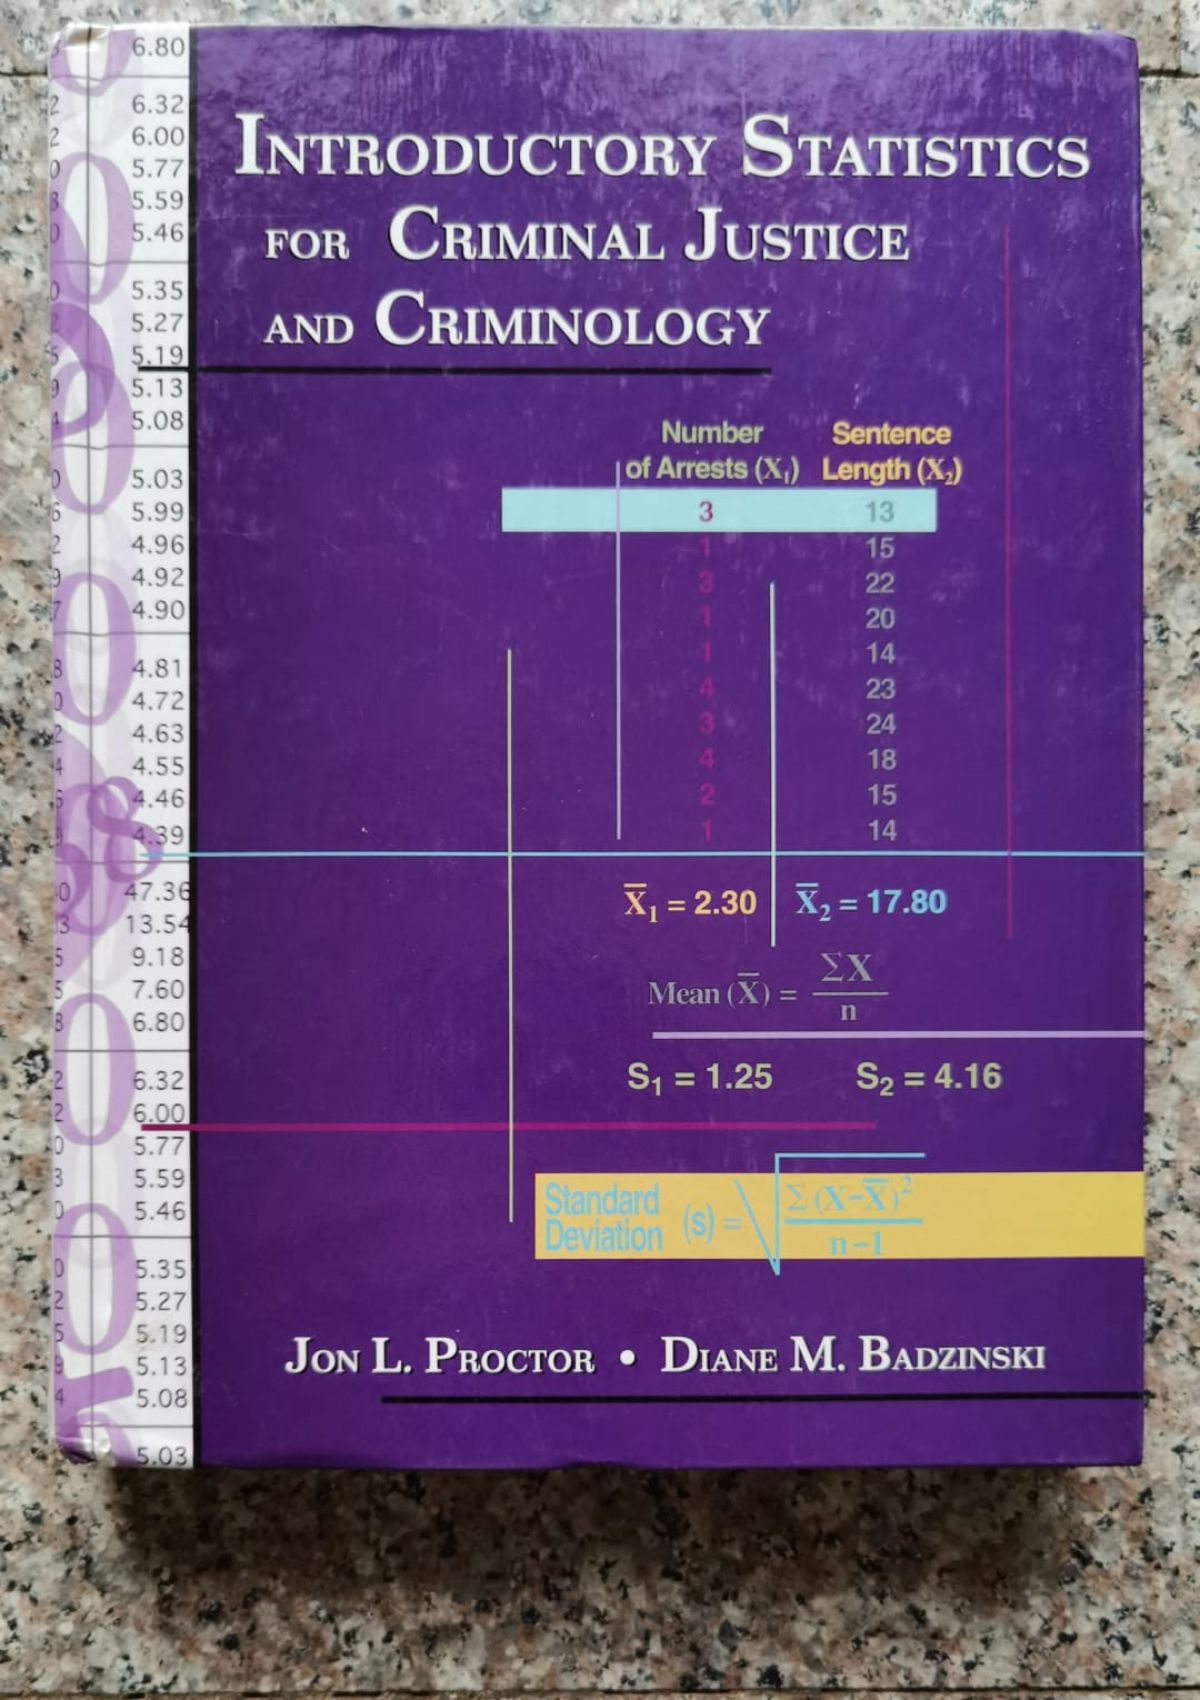 introductory statistics for criminal justice and criminology                                         badzinski, diane m., proctor, jon l.                                                                